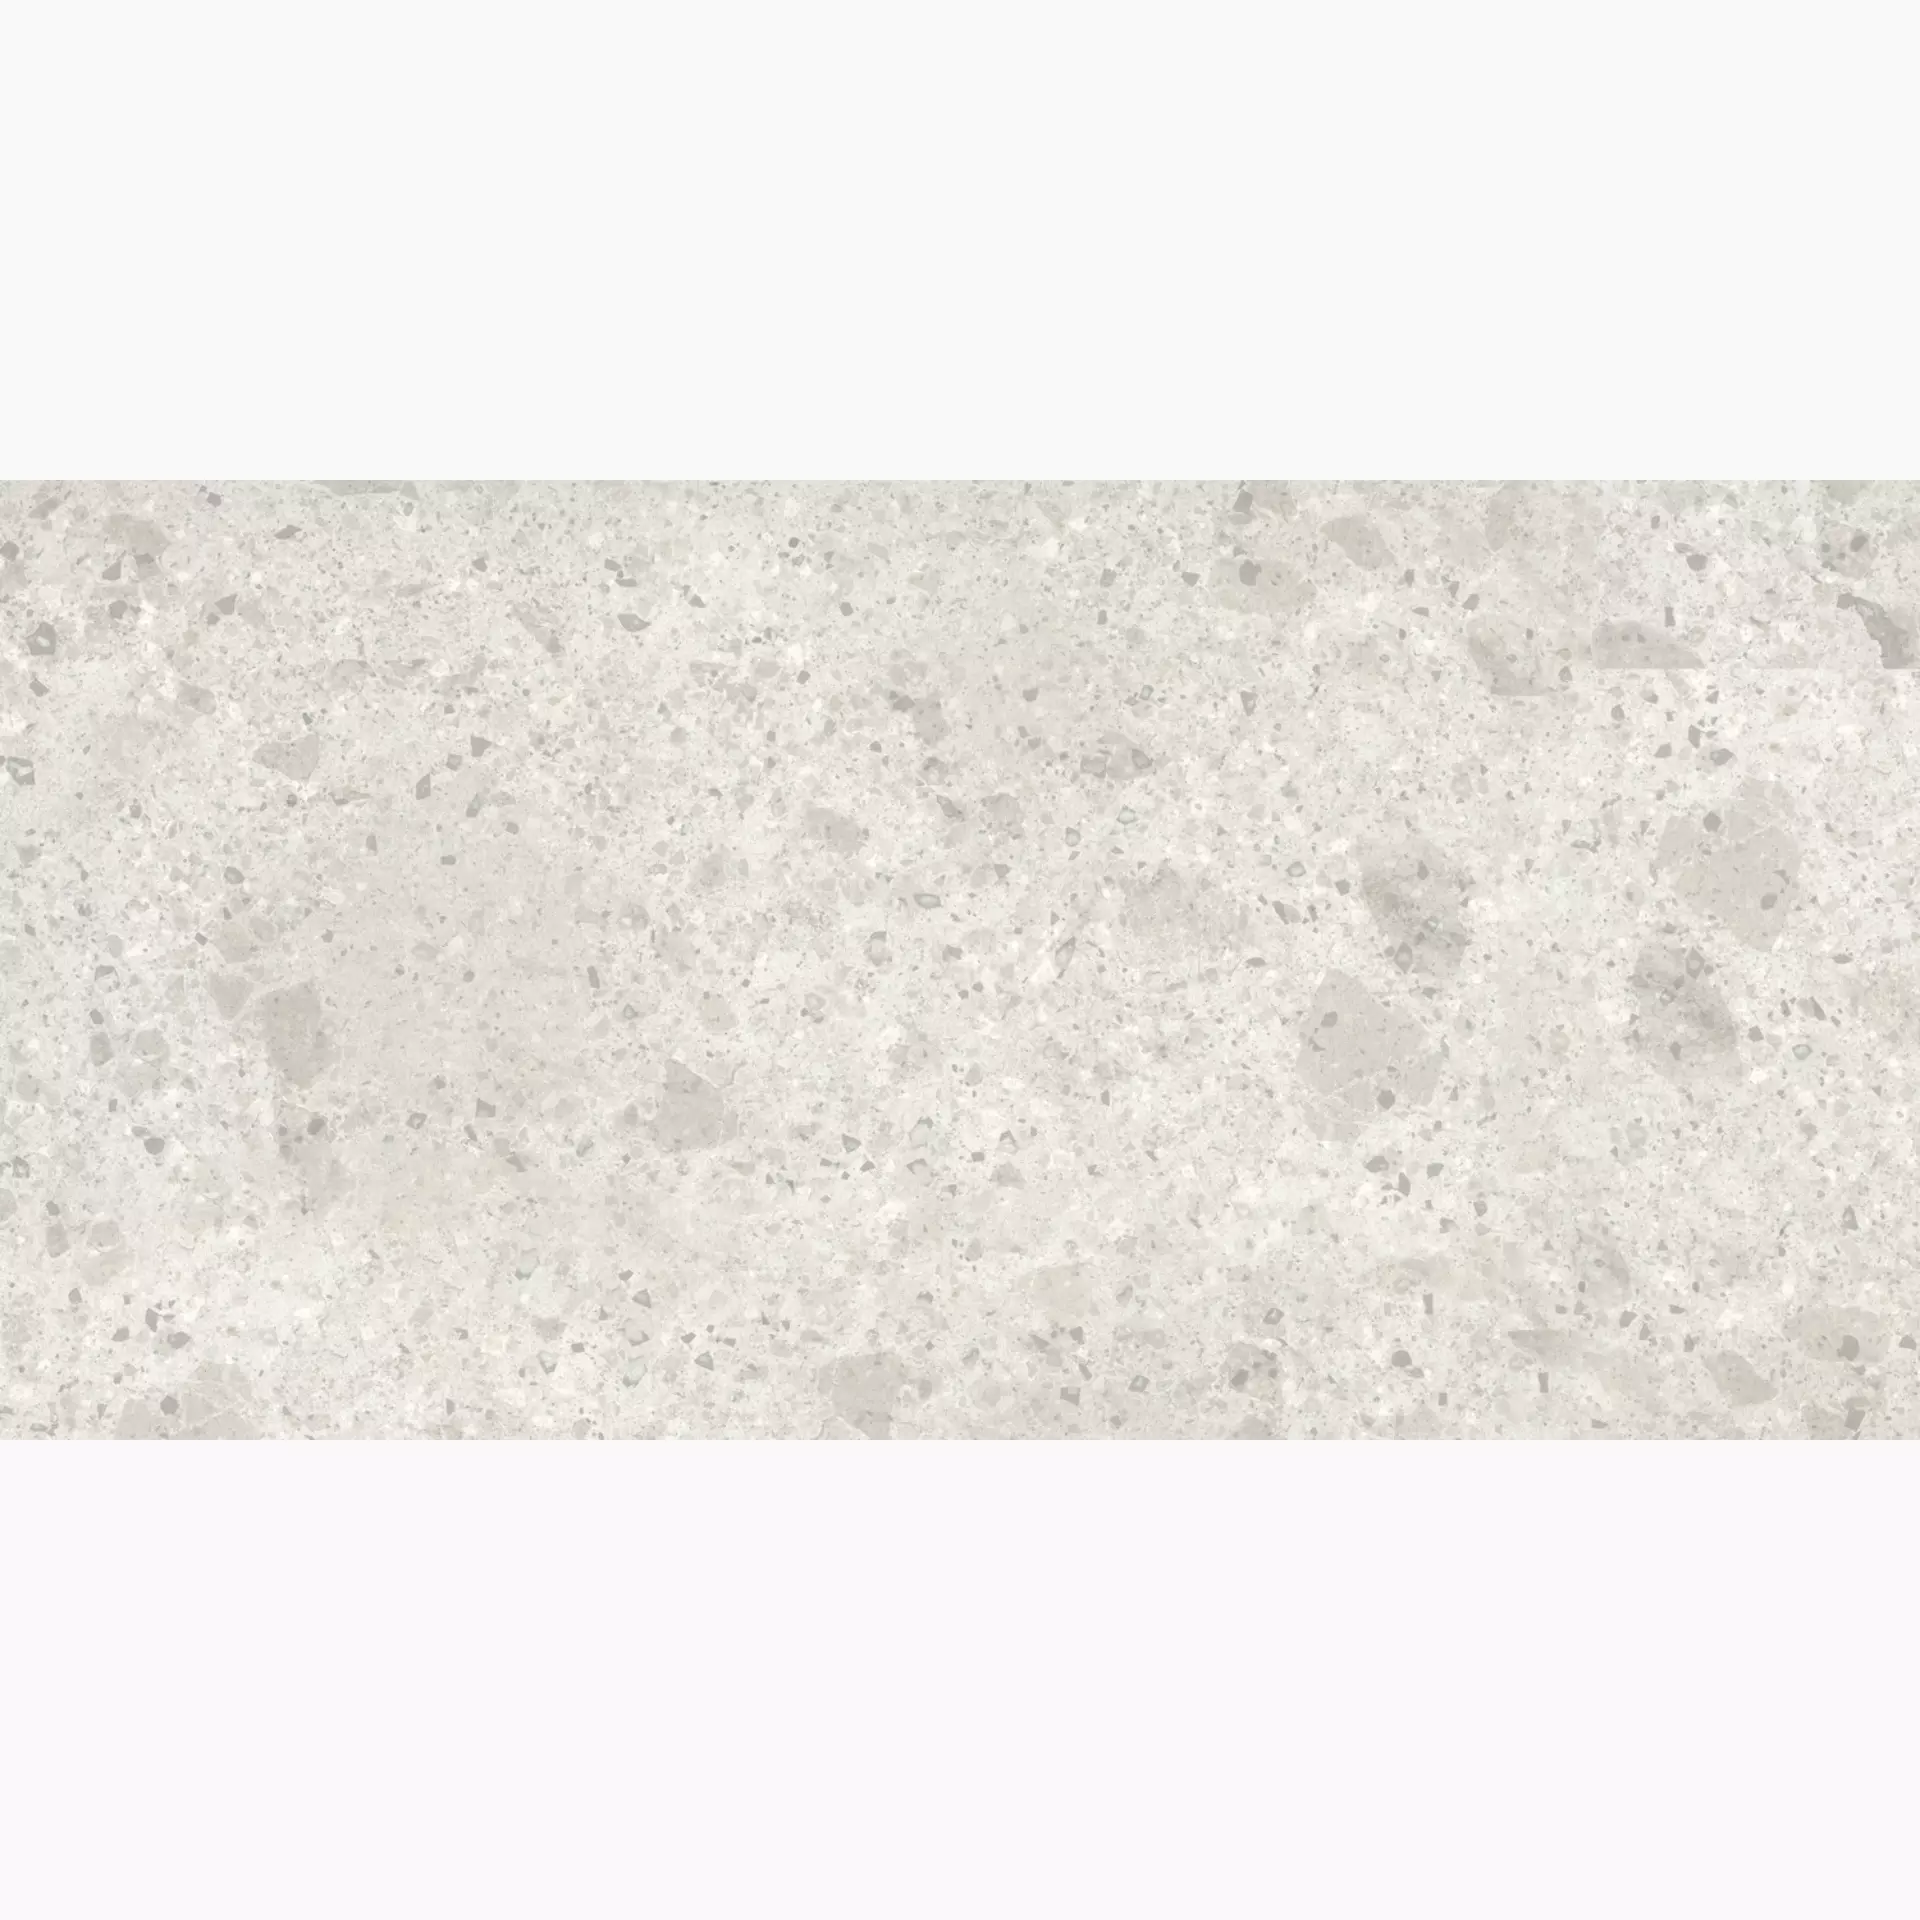 Ariostea Fragmenta Full Body Bianco Greco Soft P150616 75x150cm rectified 10mm